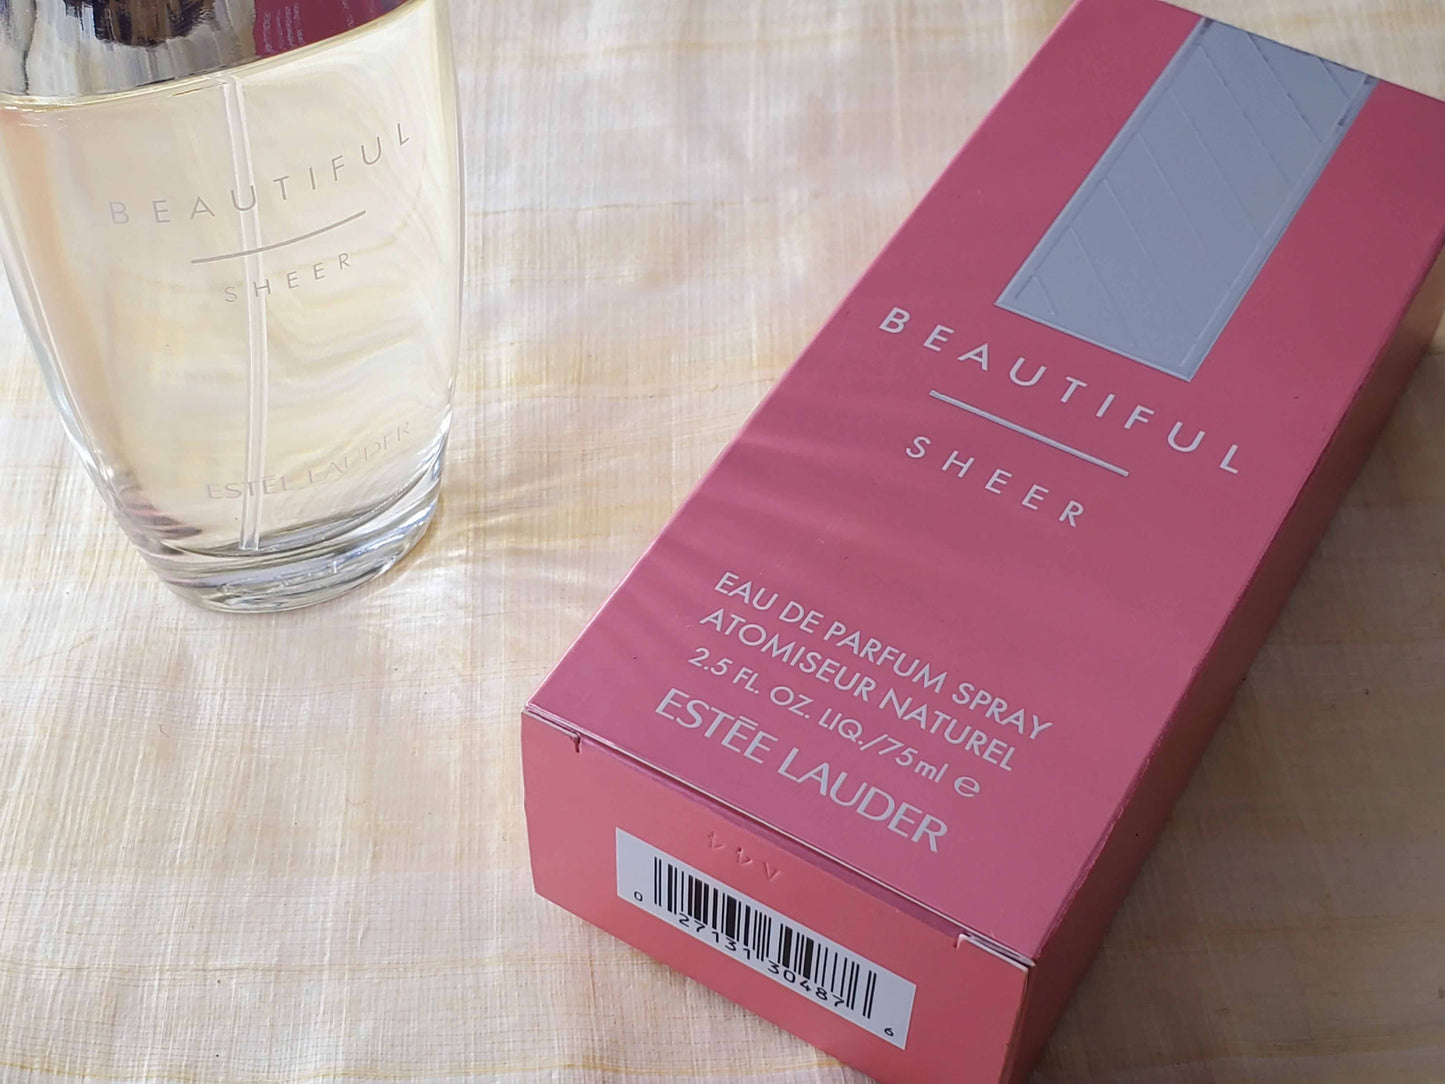 Beautiful Sheer Estée Lauder for women EDP Spray 75 ml 2.5 oz OR 30 ml 1 oz, Vintage